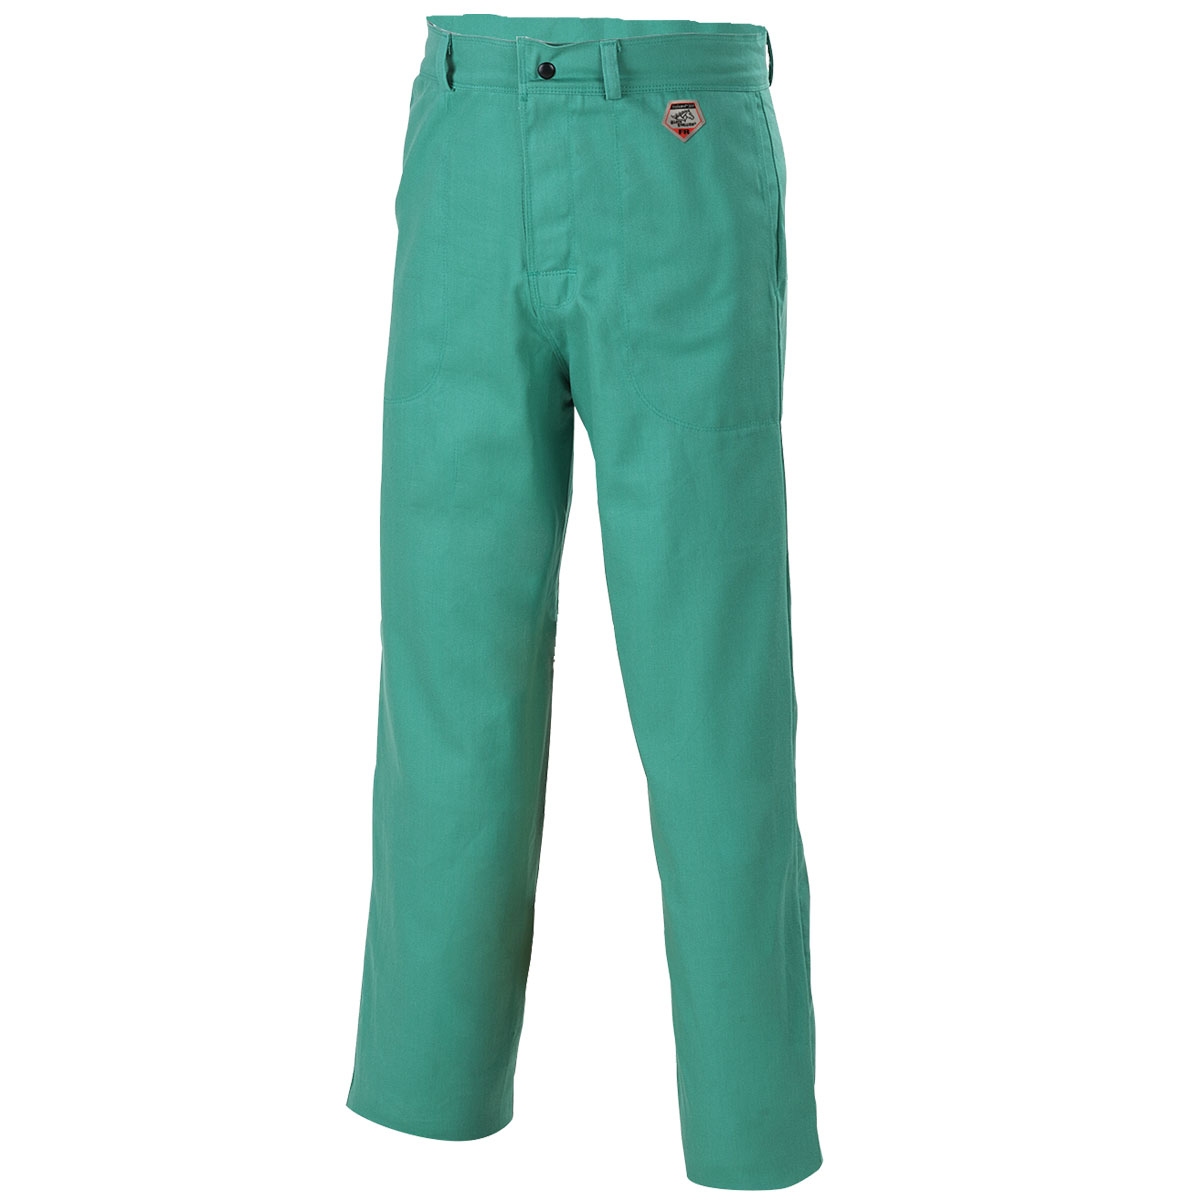 FR Pants -> 100% FR Cotton | Work | 9 oz | Green ·FRC Clothing Plus